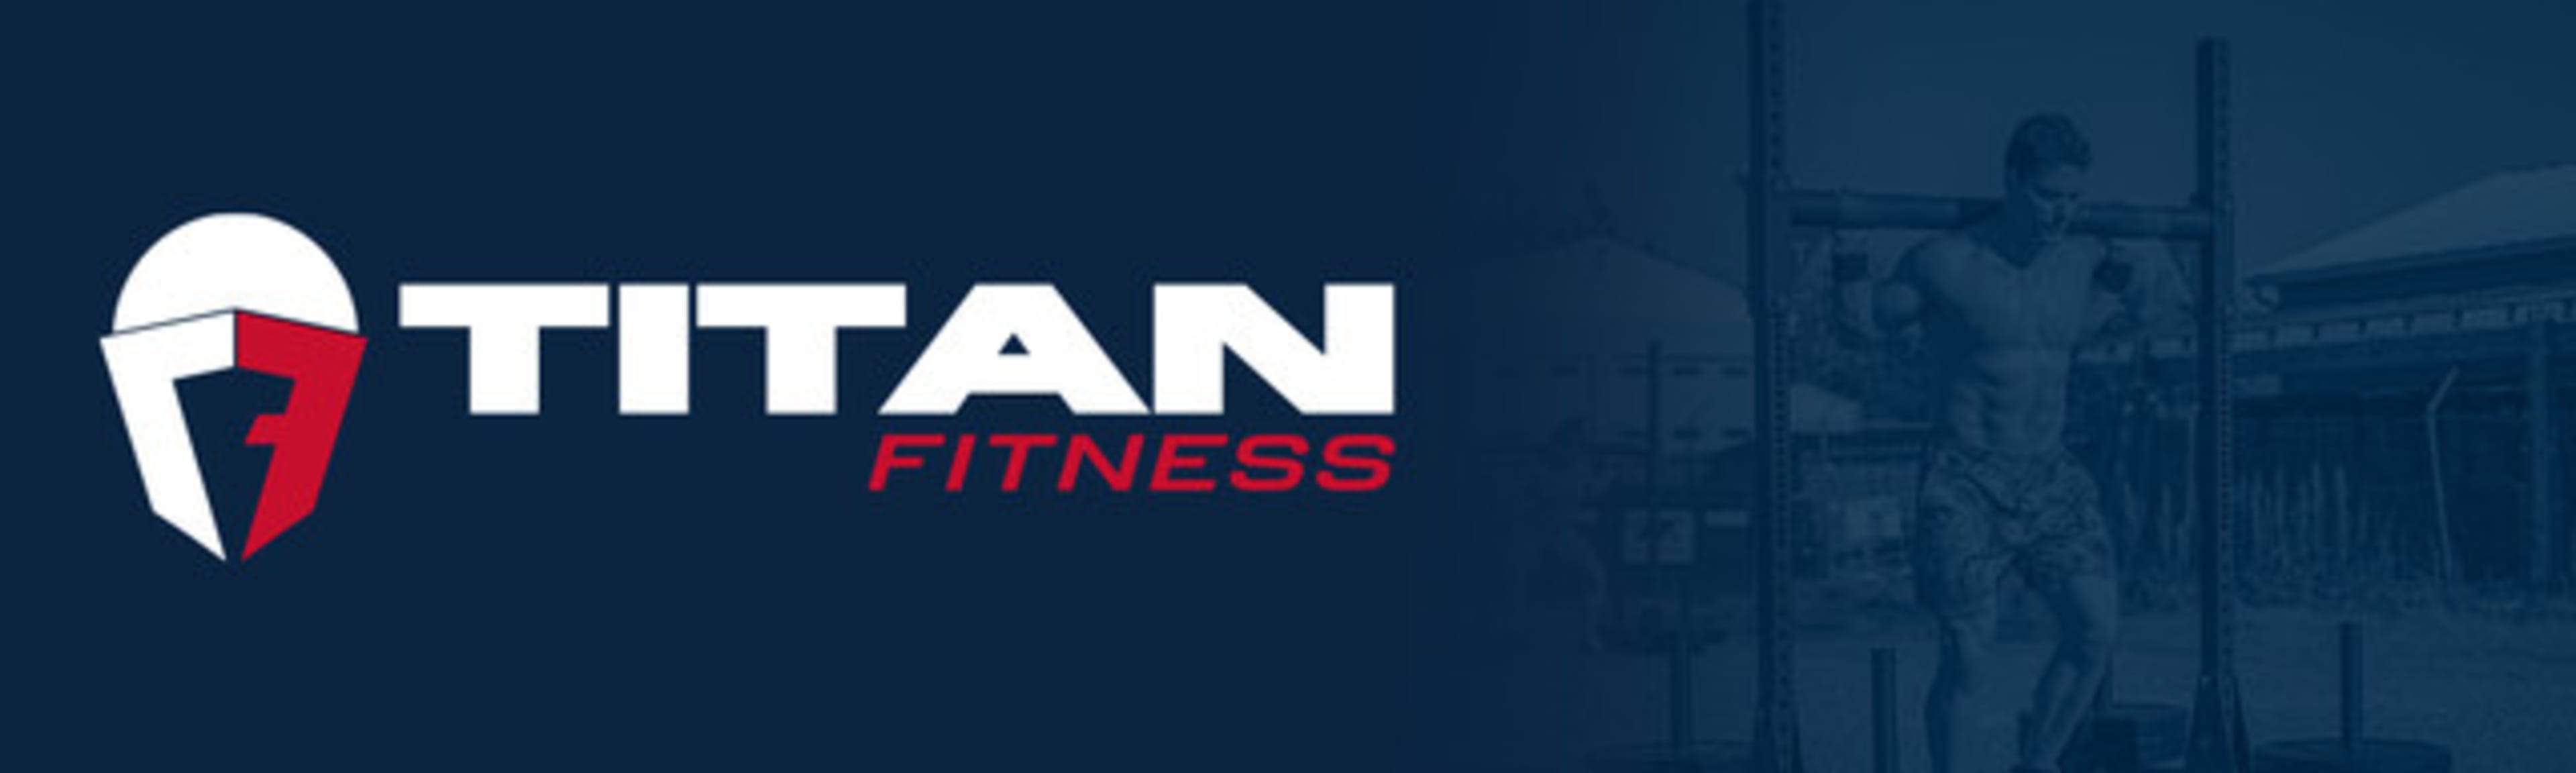 Titan Fitness Code